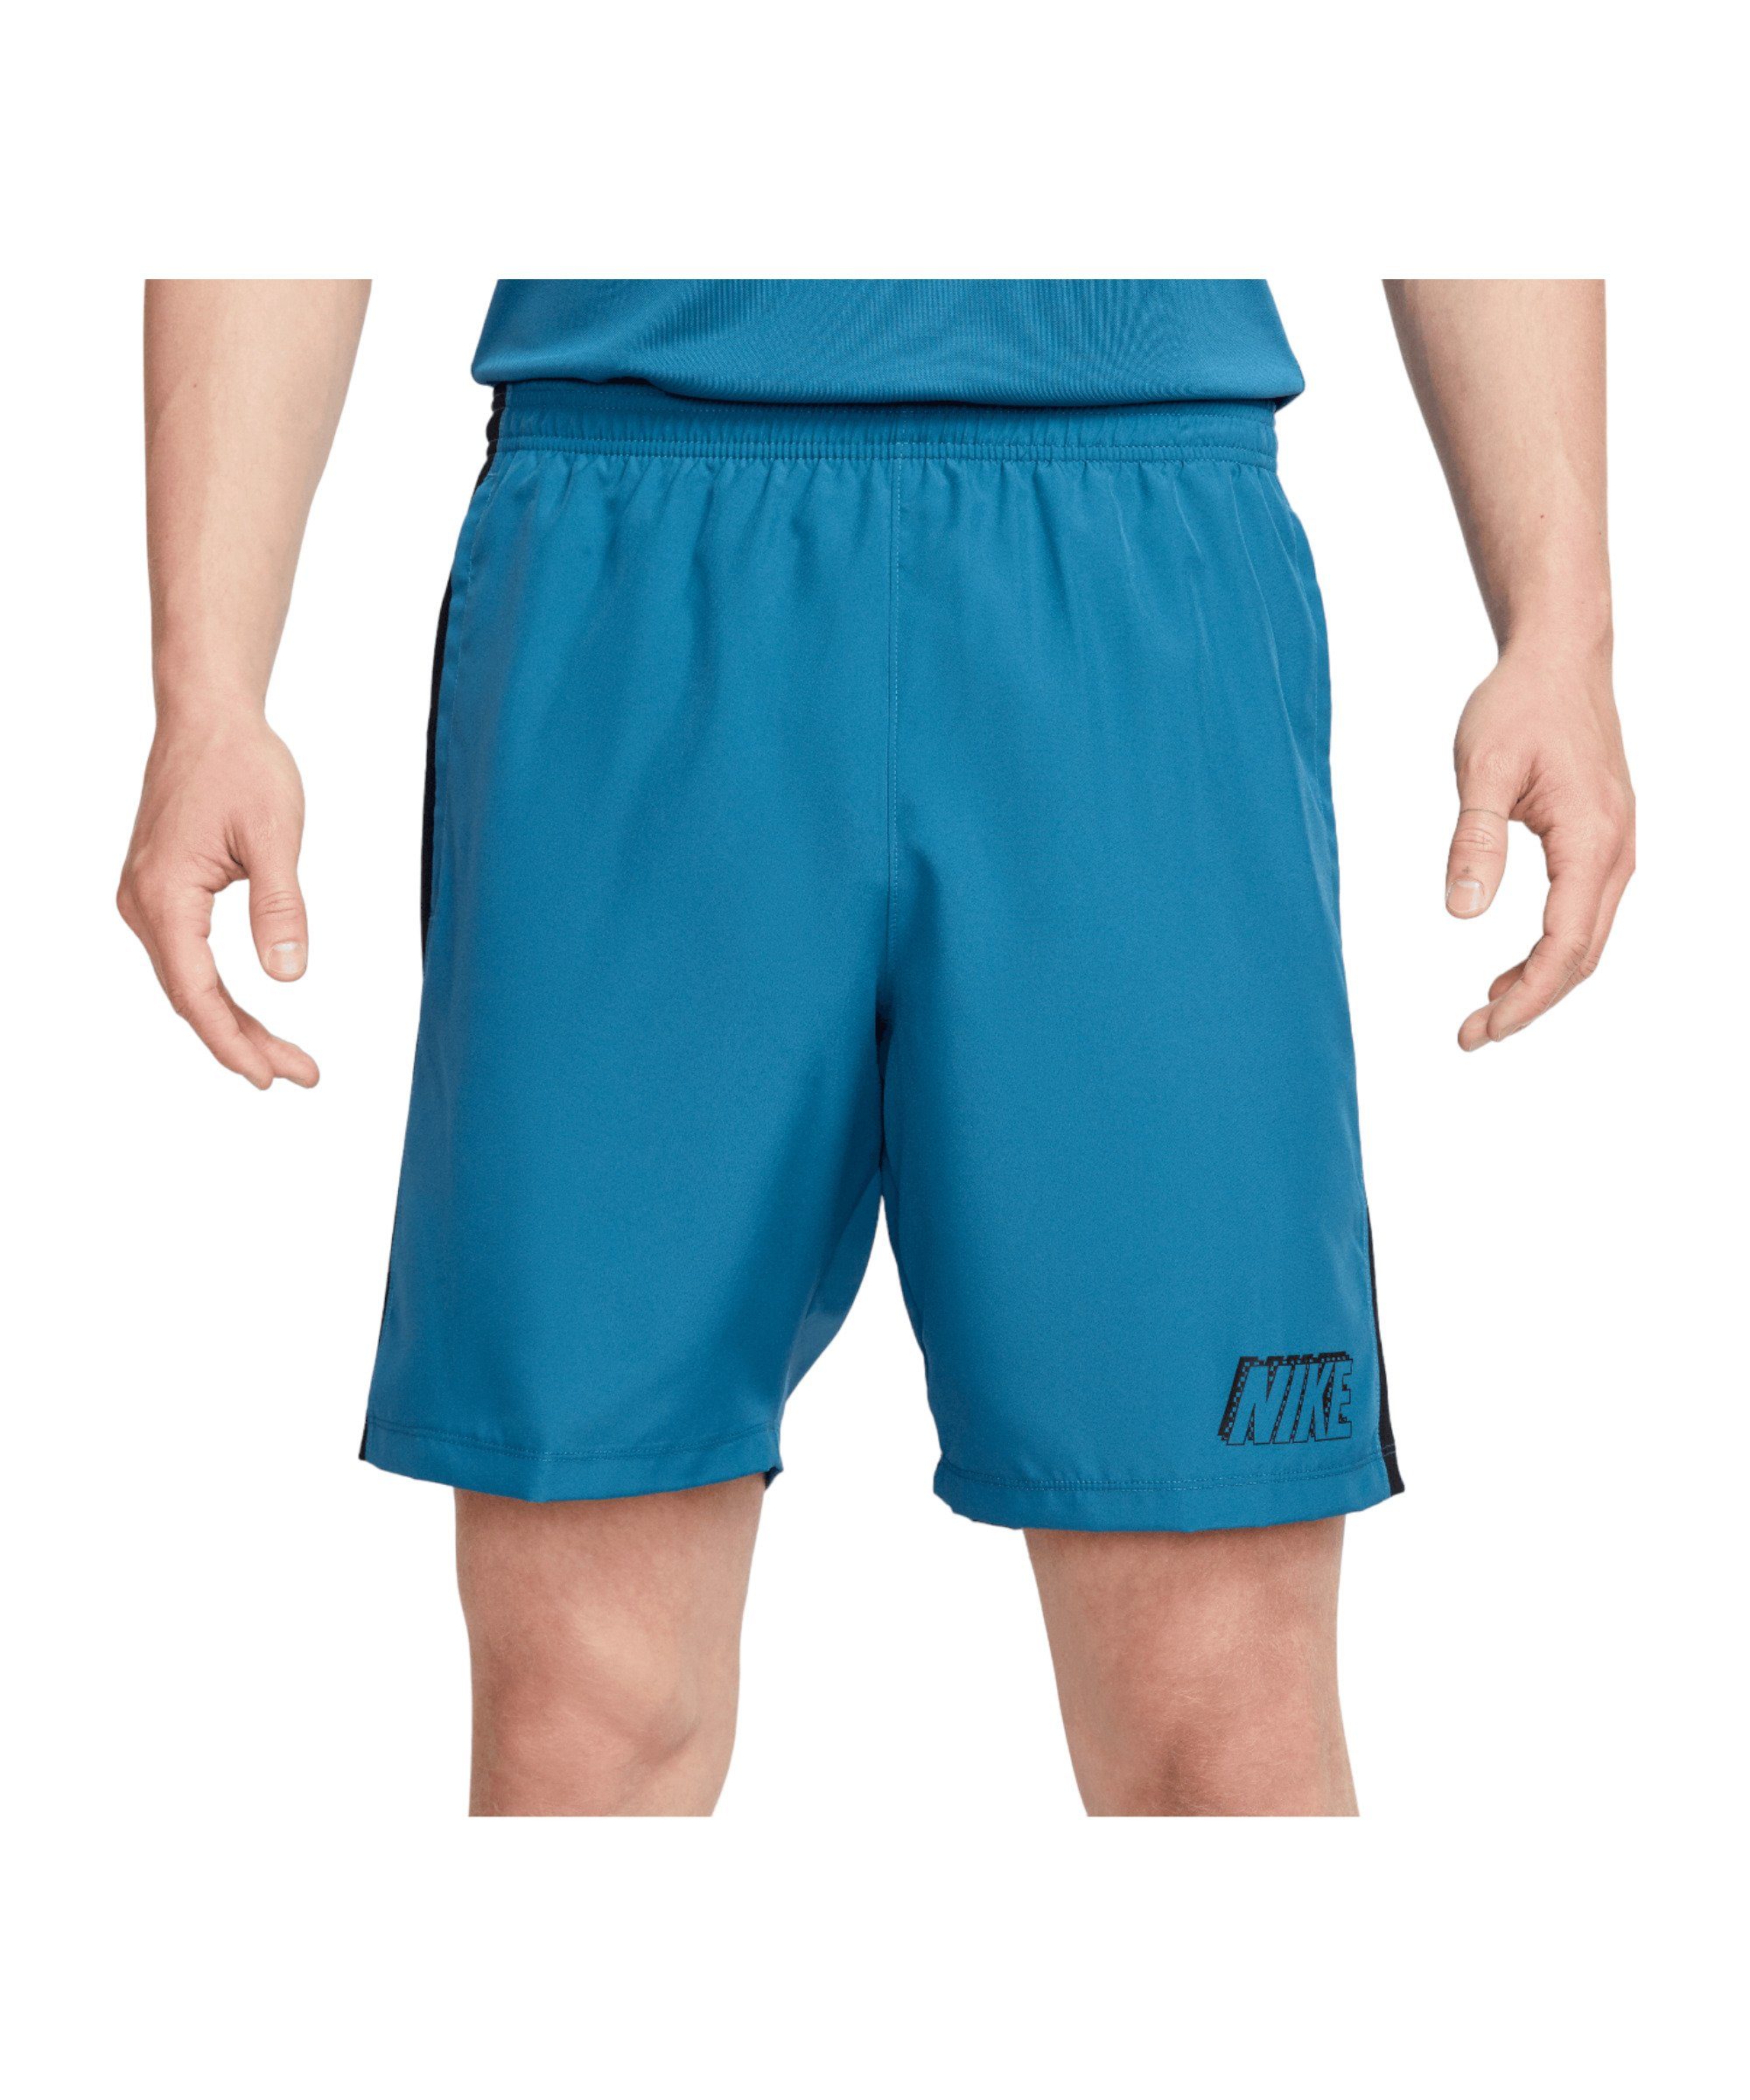 Academy Sporthose Nike Short blauschwarzschwarz